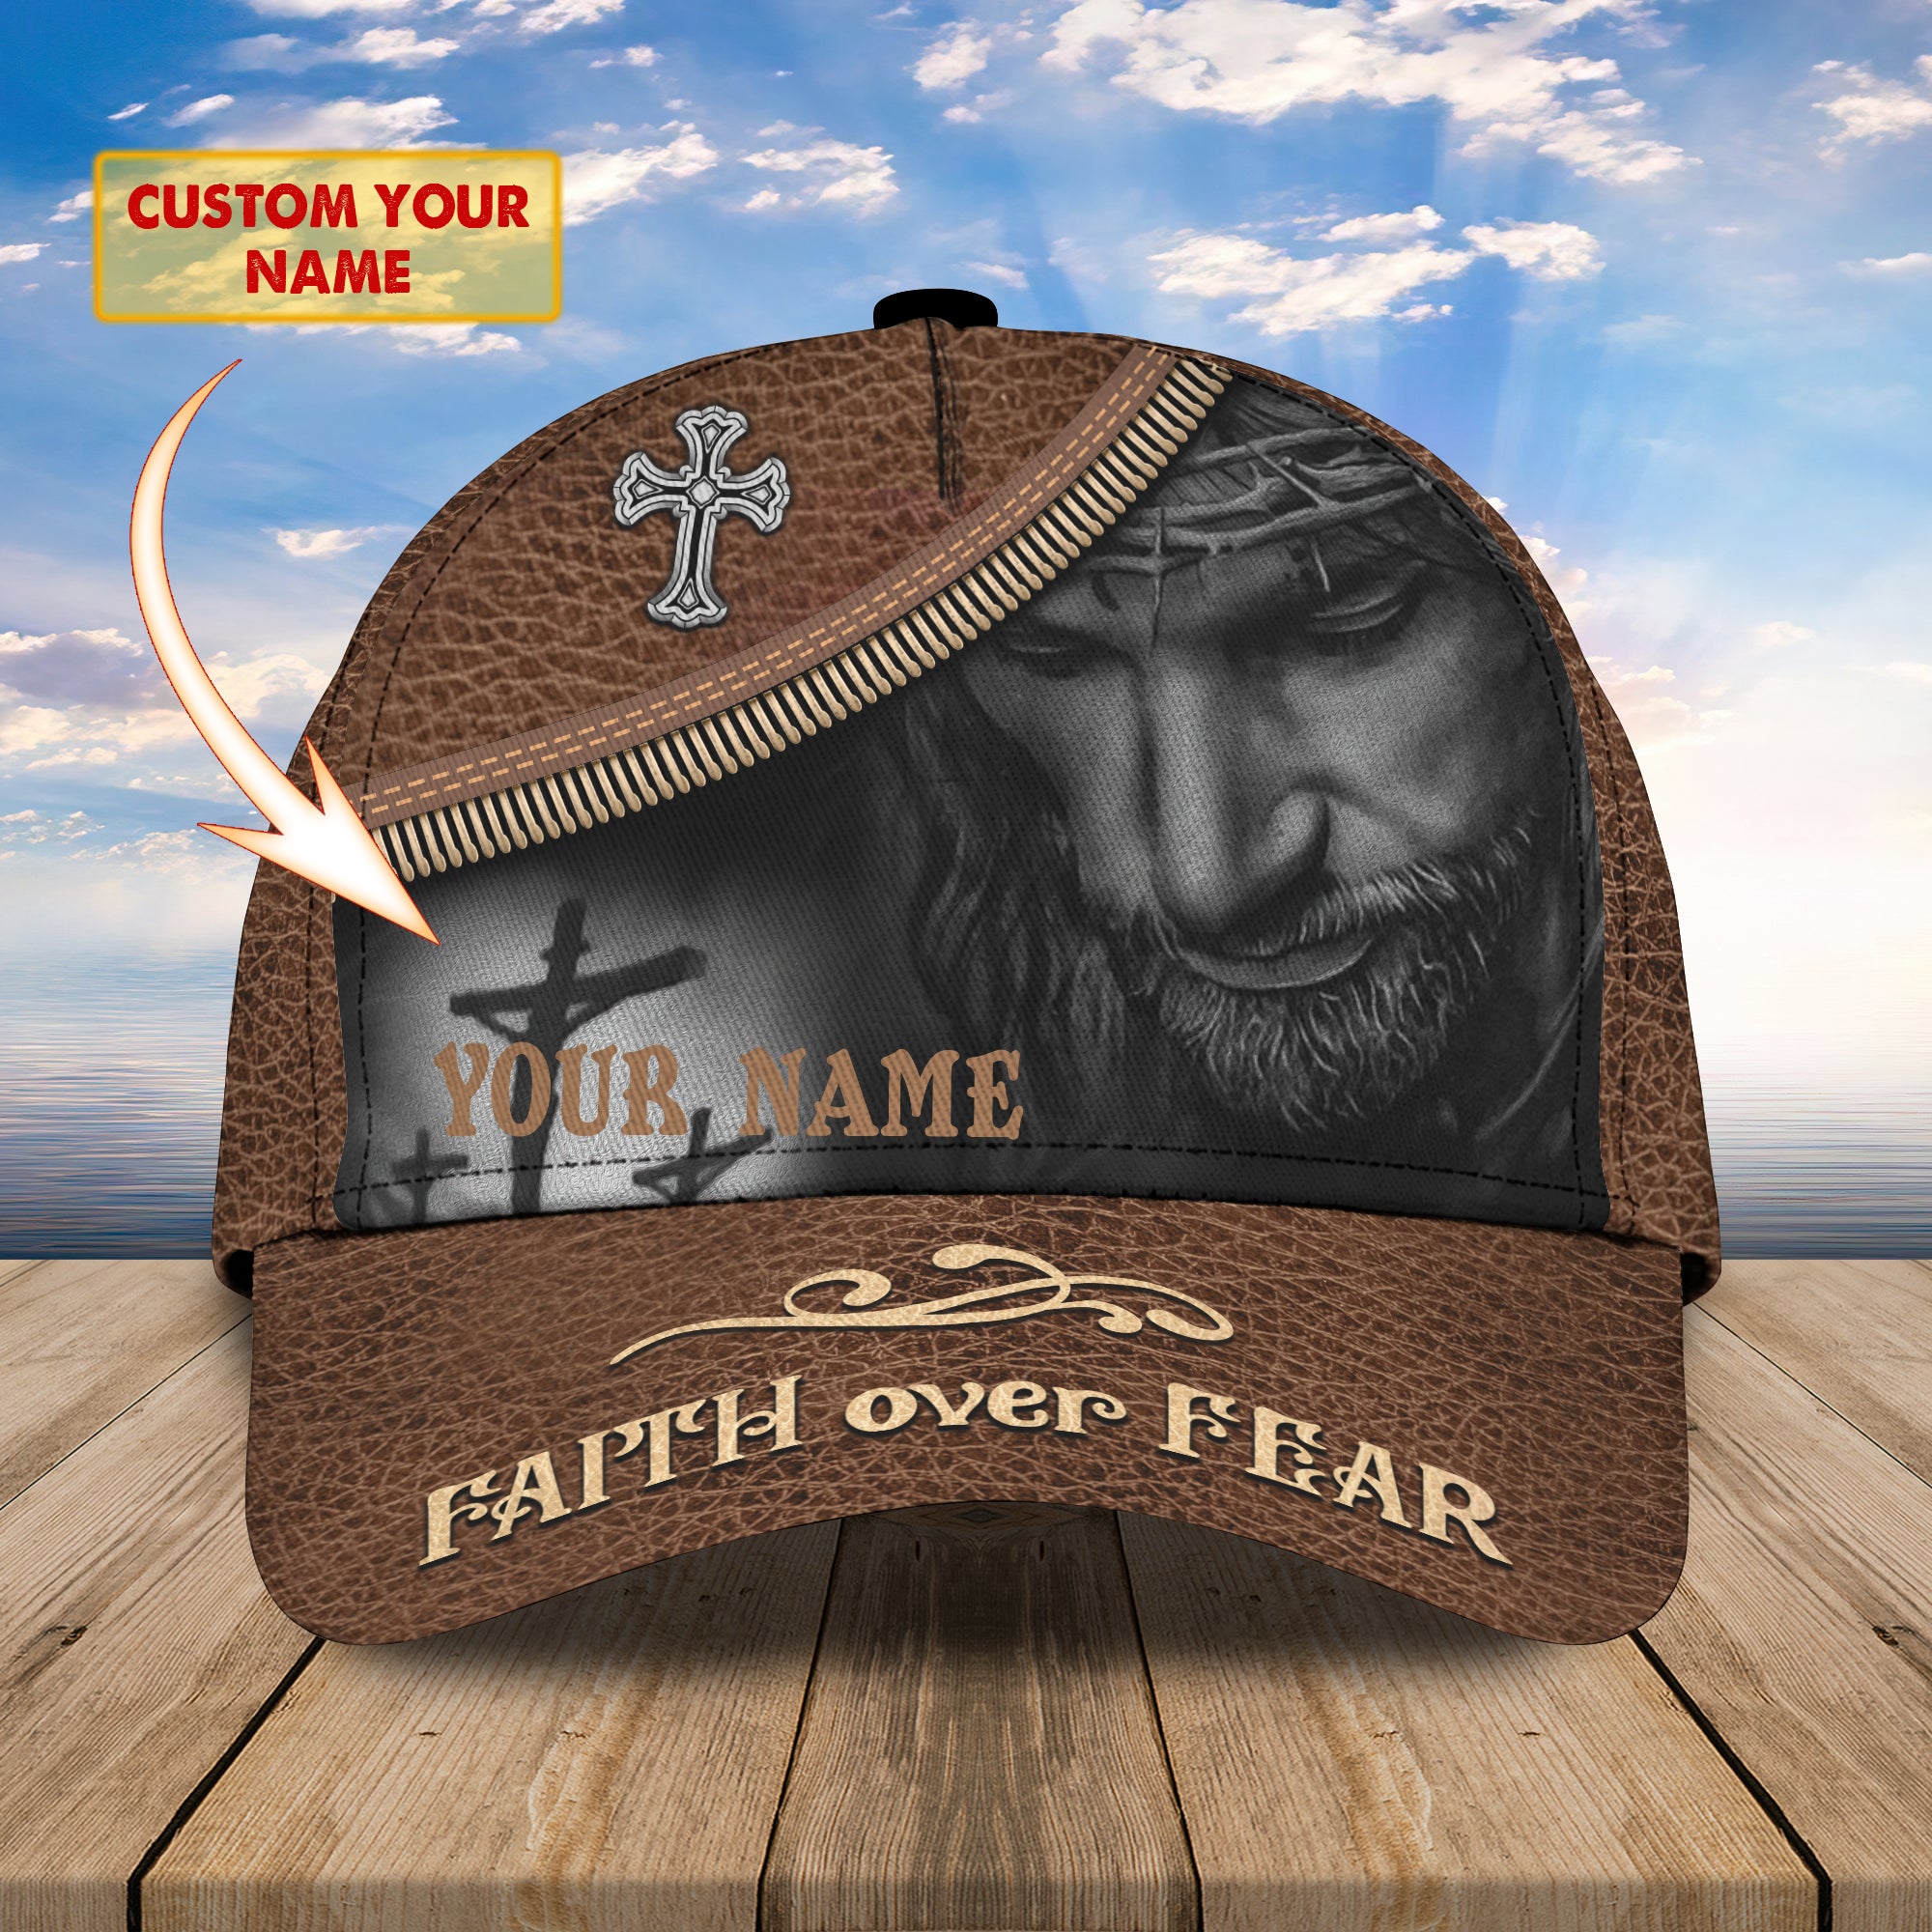 Faith Over Fear - Personalized Name Cap - Hadn